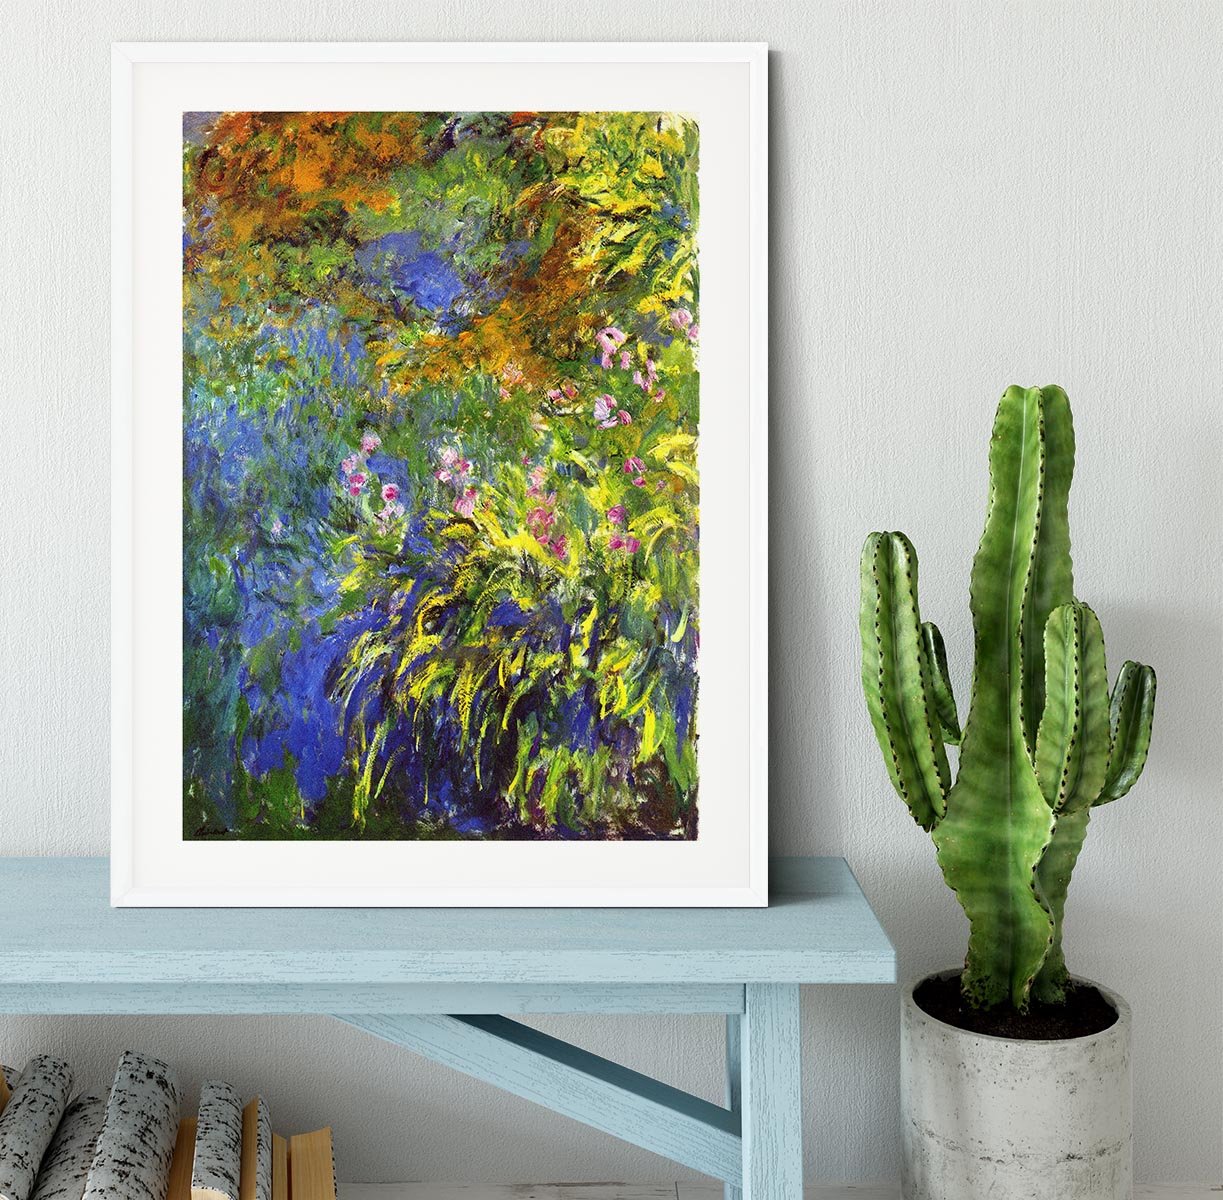 Iris at the sea rose pond 2 by Monet Framed Print - Canvas Art Rocks - 5